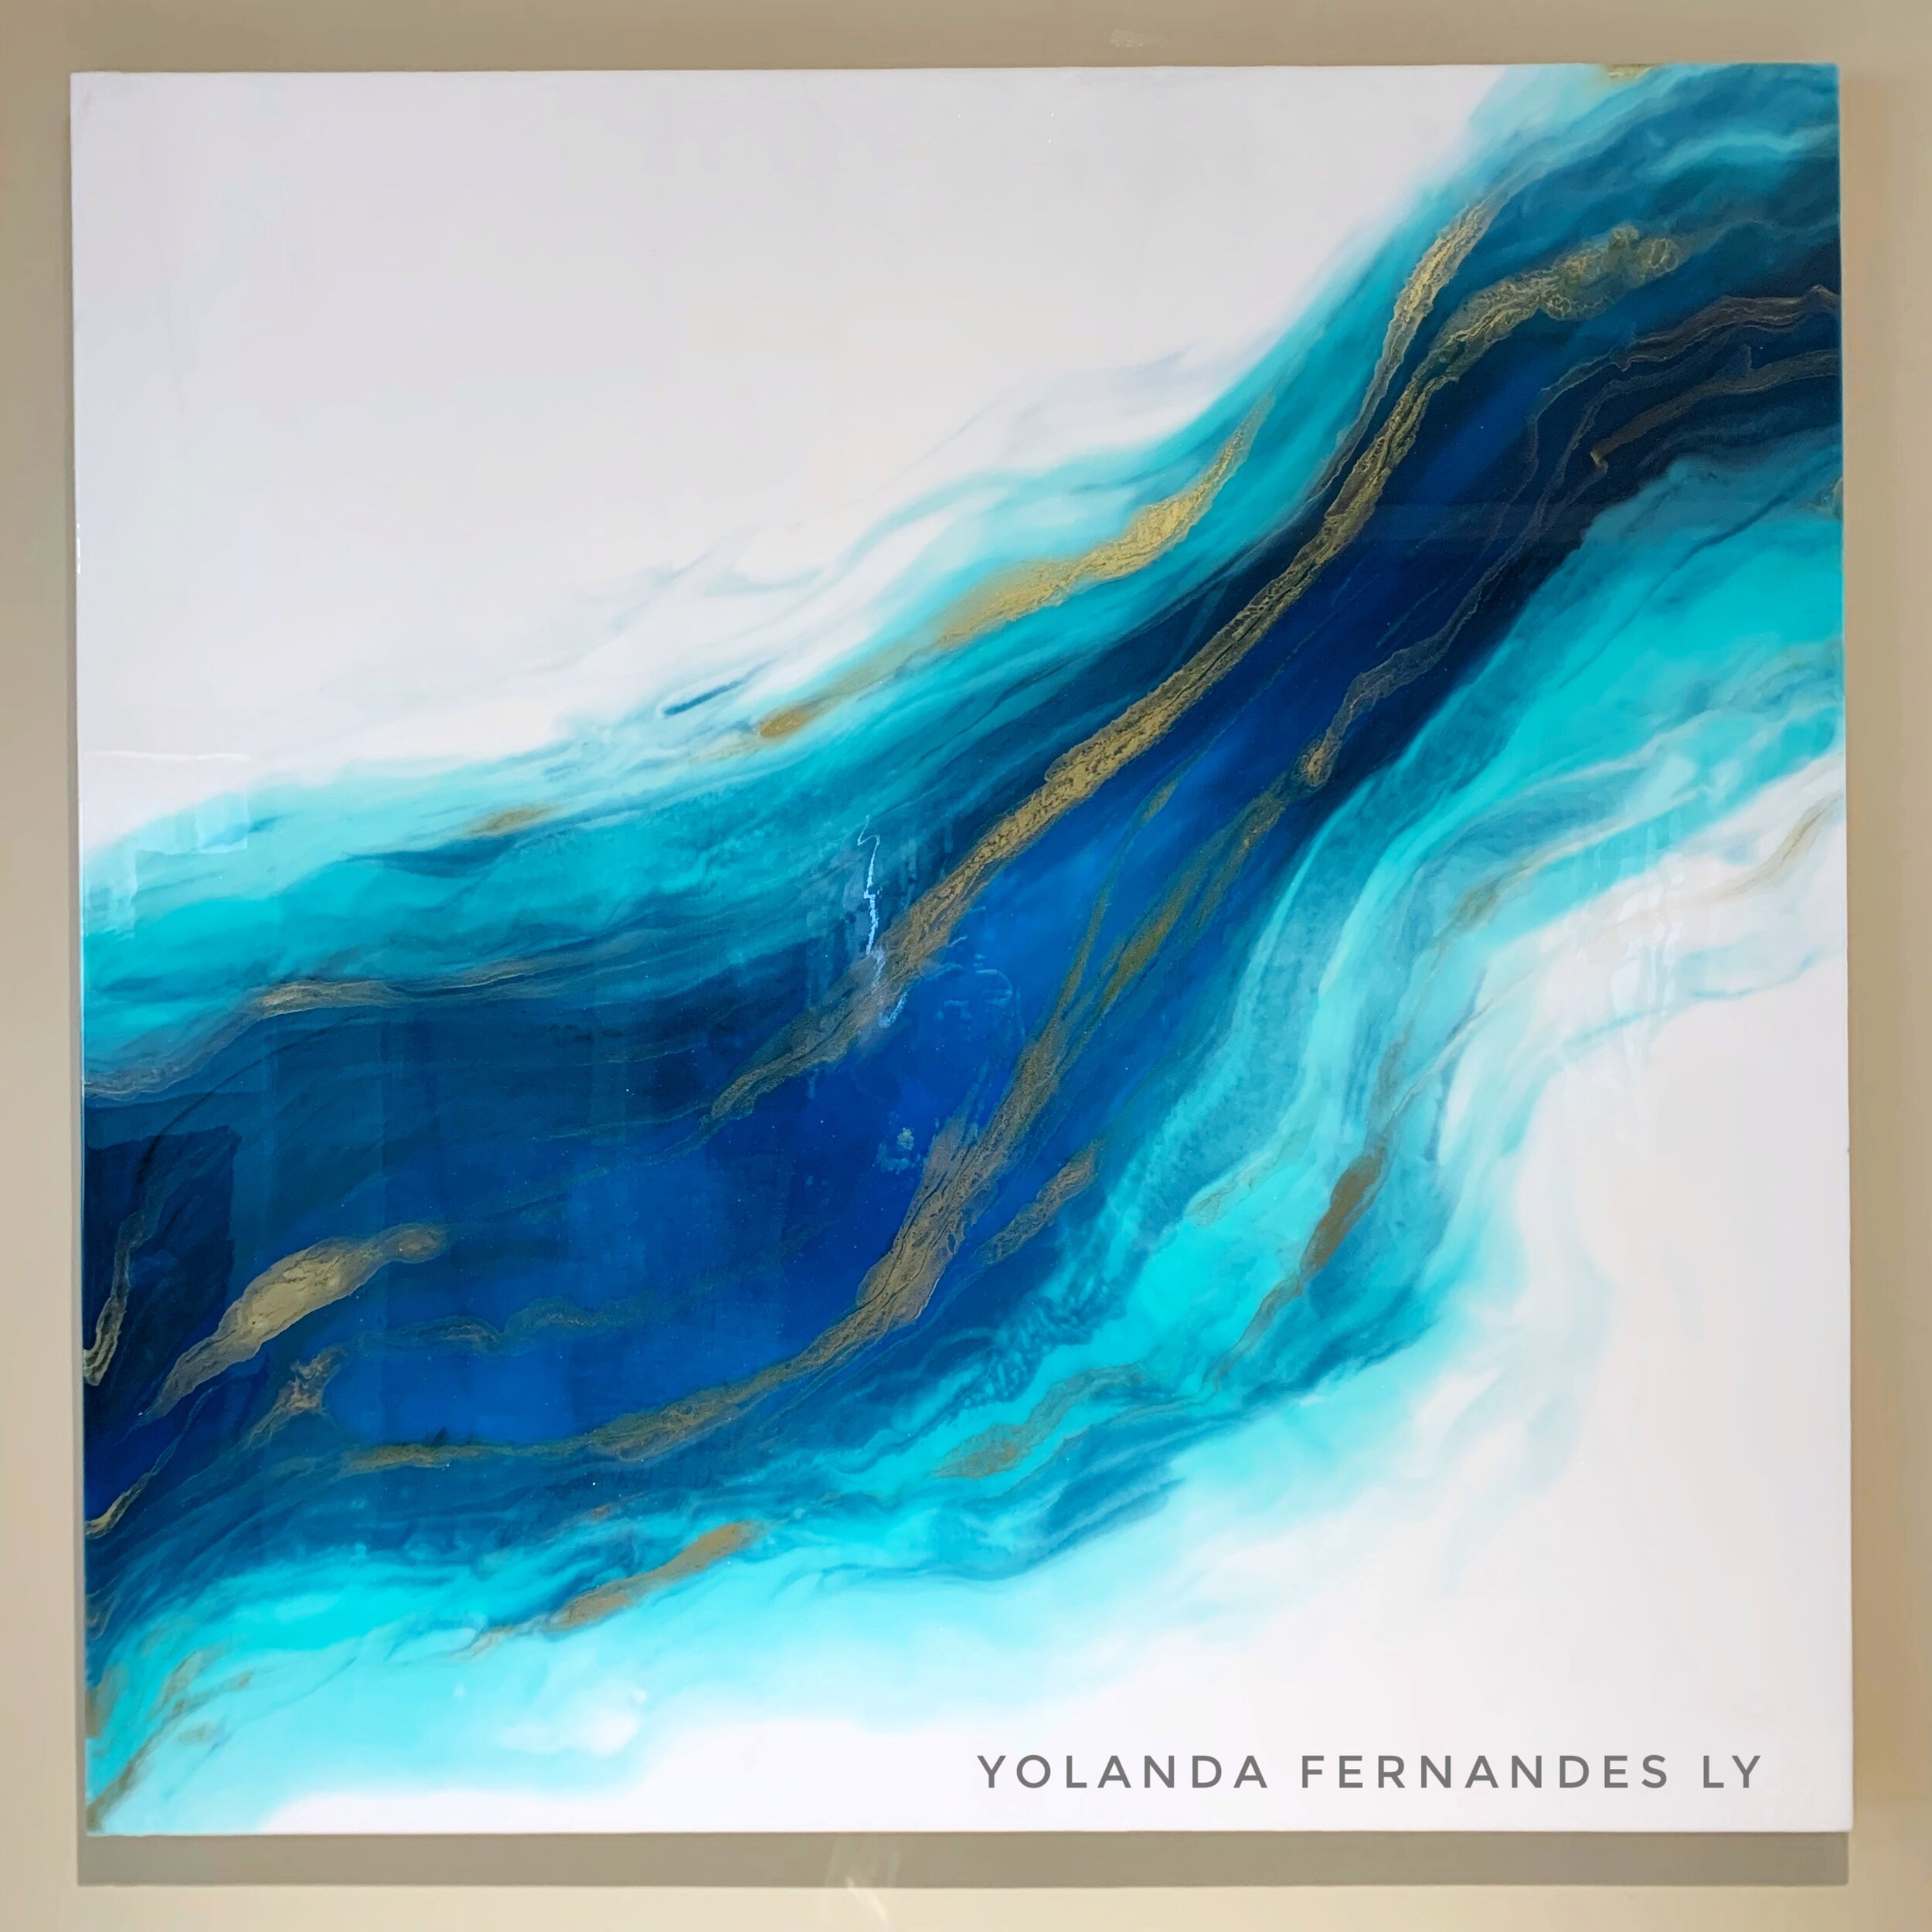 Yolanda Fernandes Ly Resin FLuid Art 4 feet by 4 feet.jpg